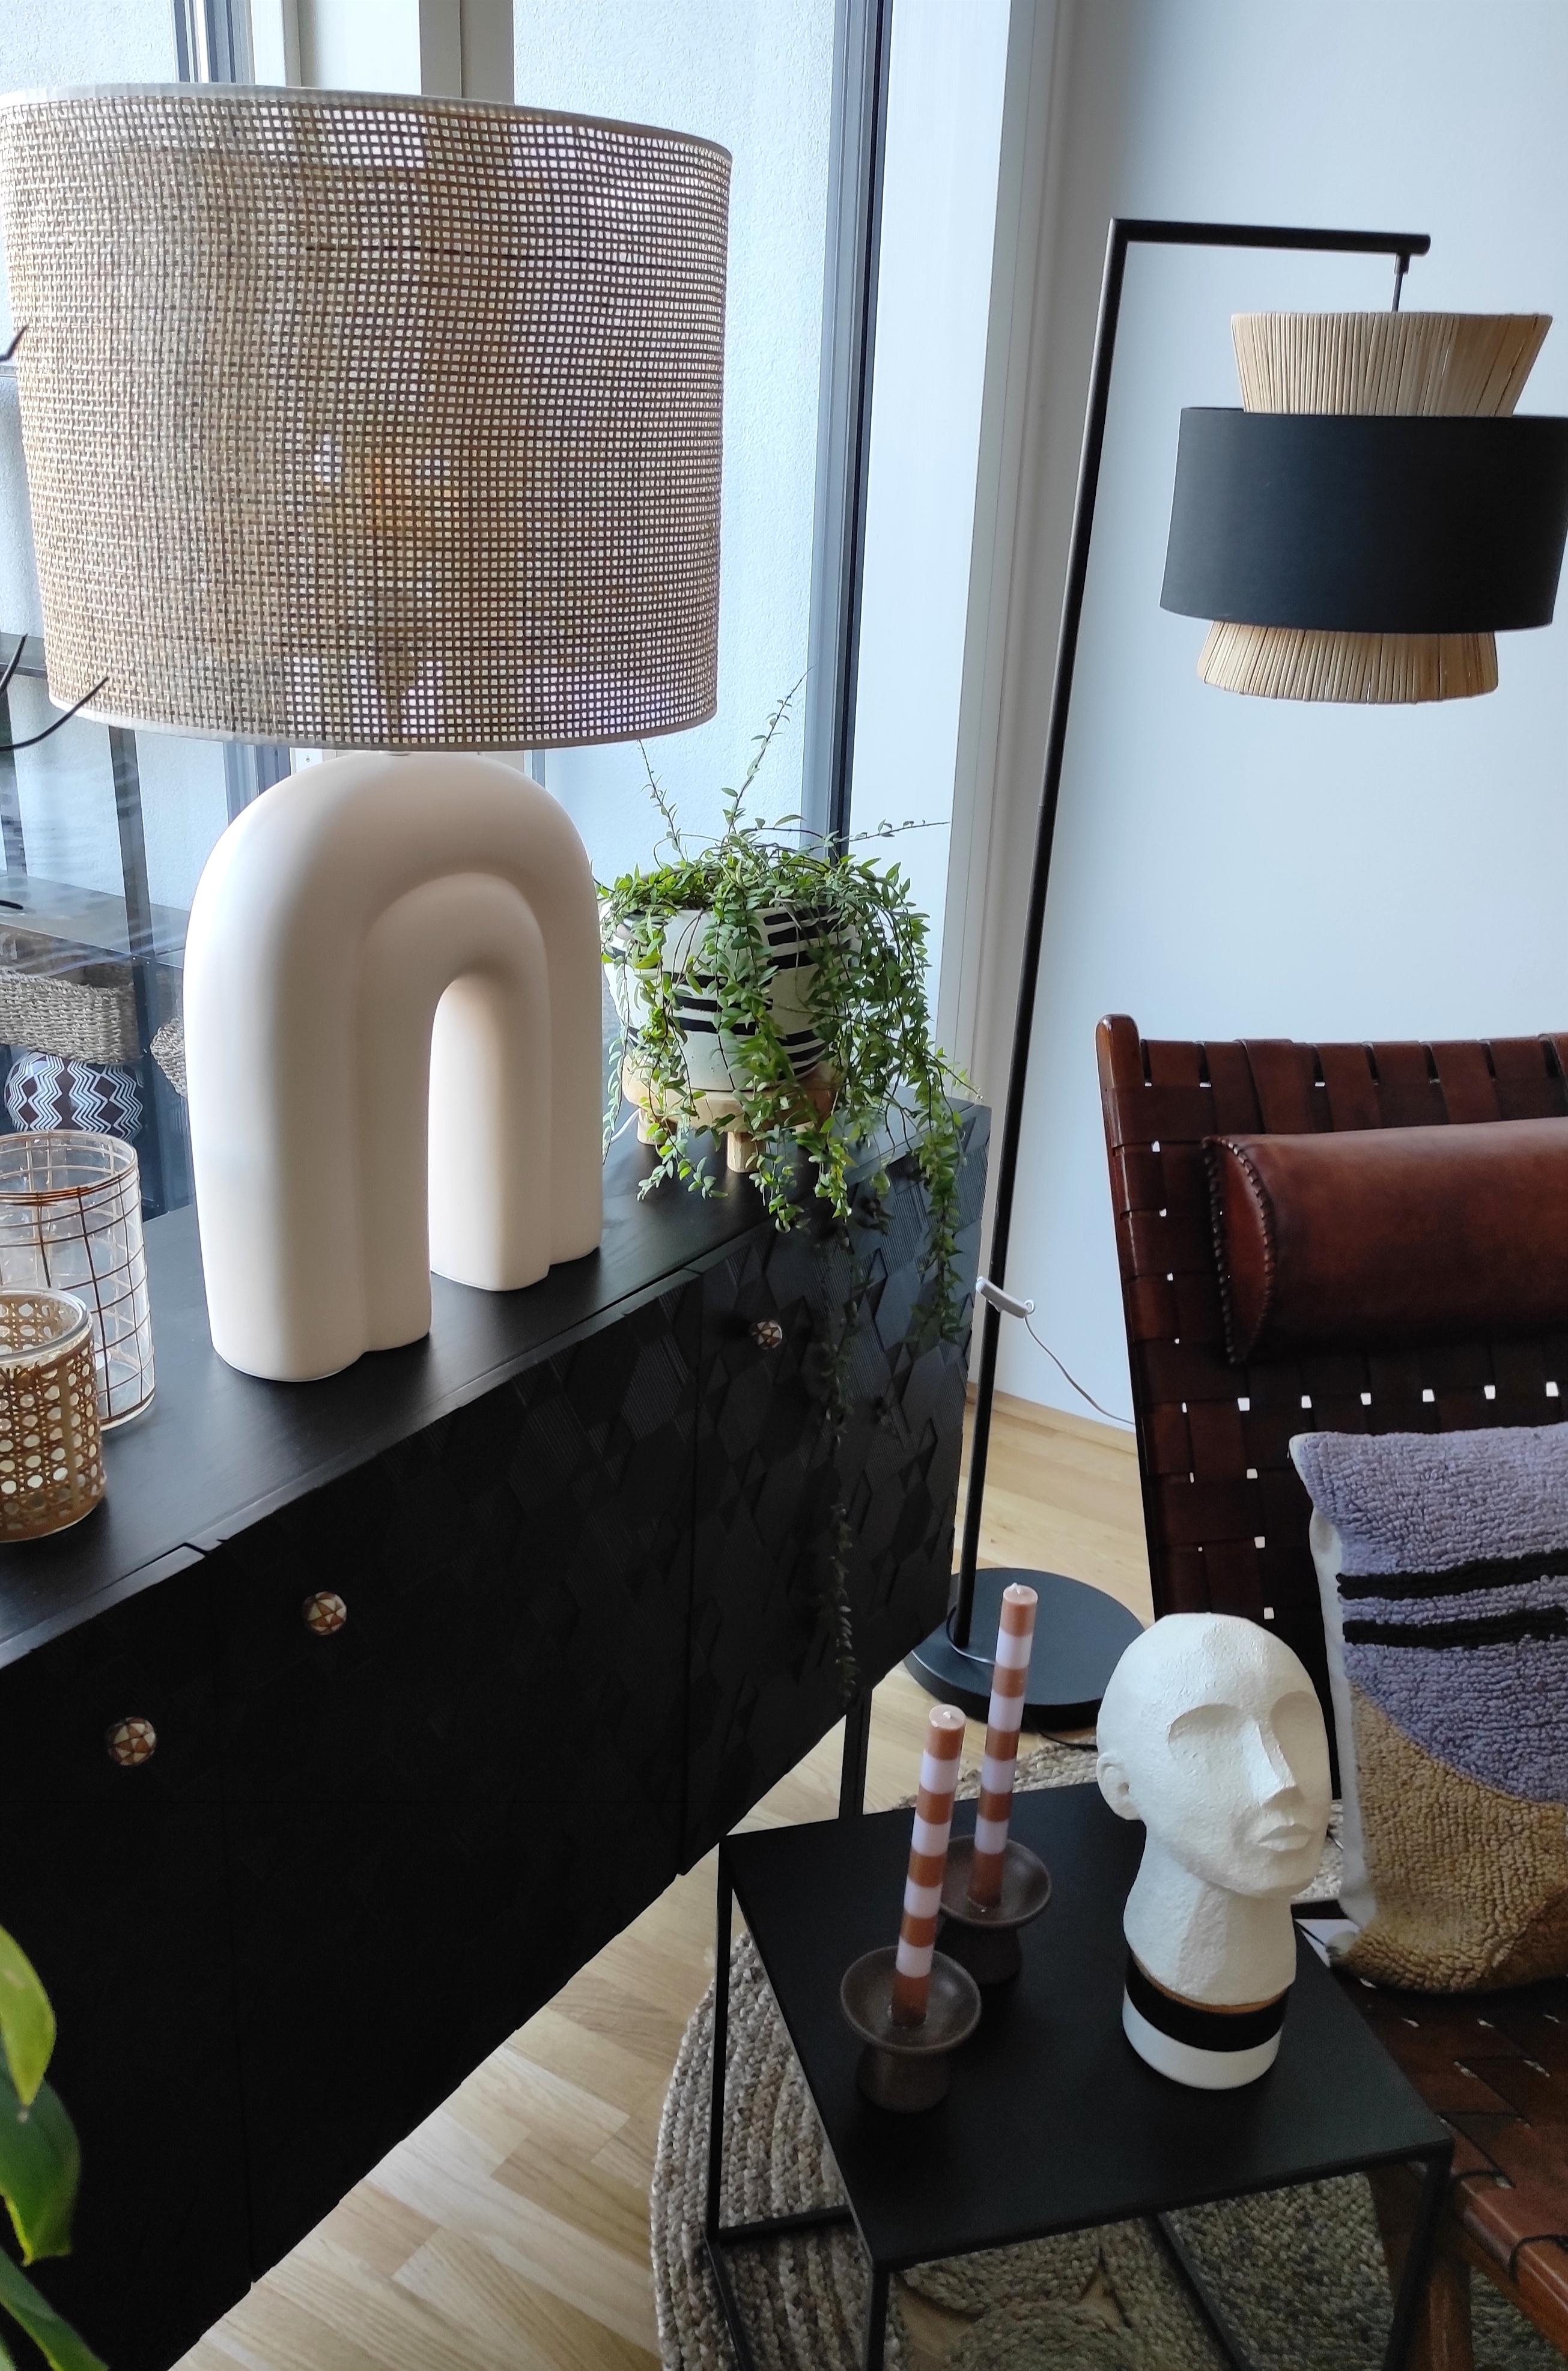 #living #light #modernliving #home #interior #interiordesign #design #lampenliebe #cozy #art #couchstyle #couchliebt 